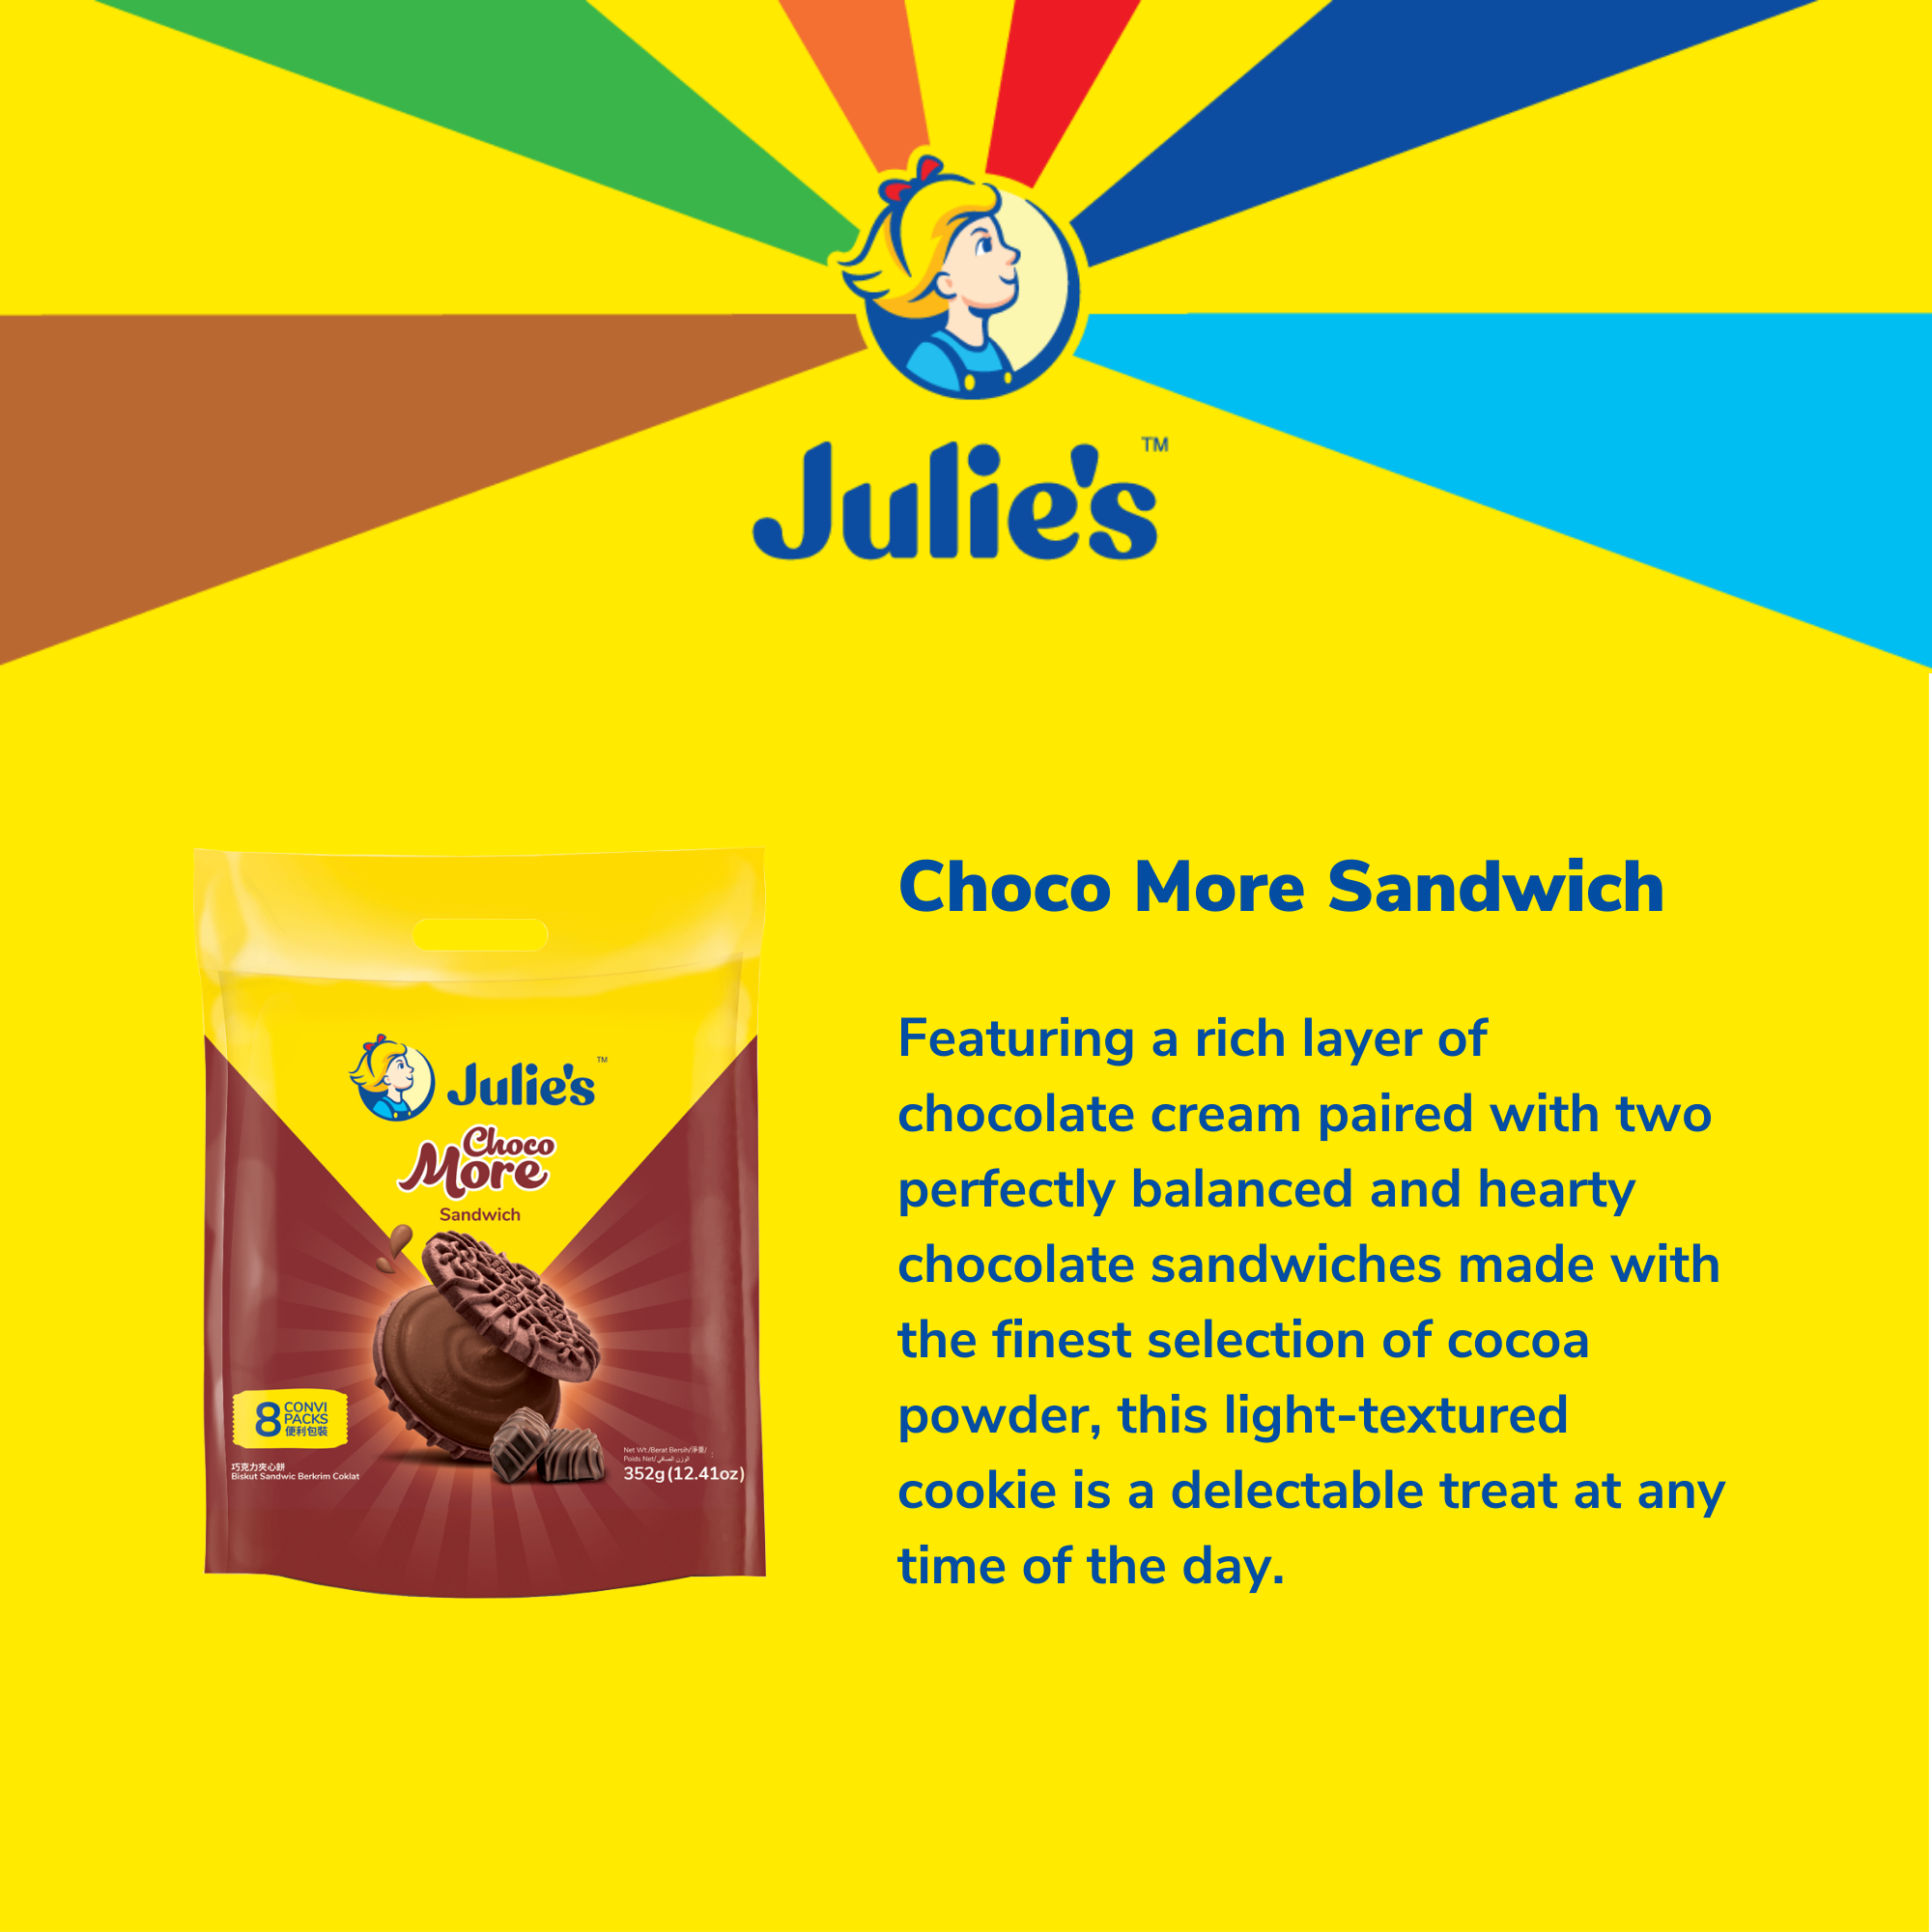 Julie's Choco More Sandwich 352g x 2 packs